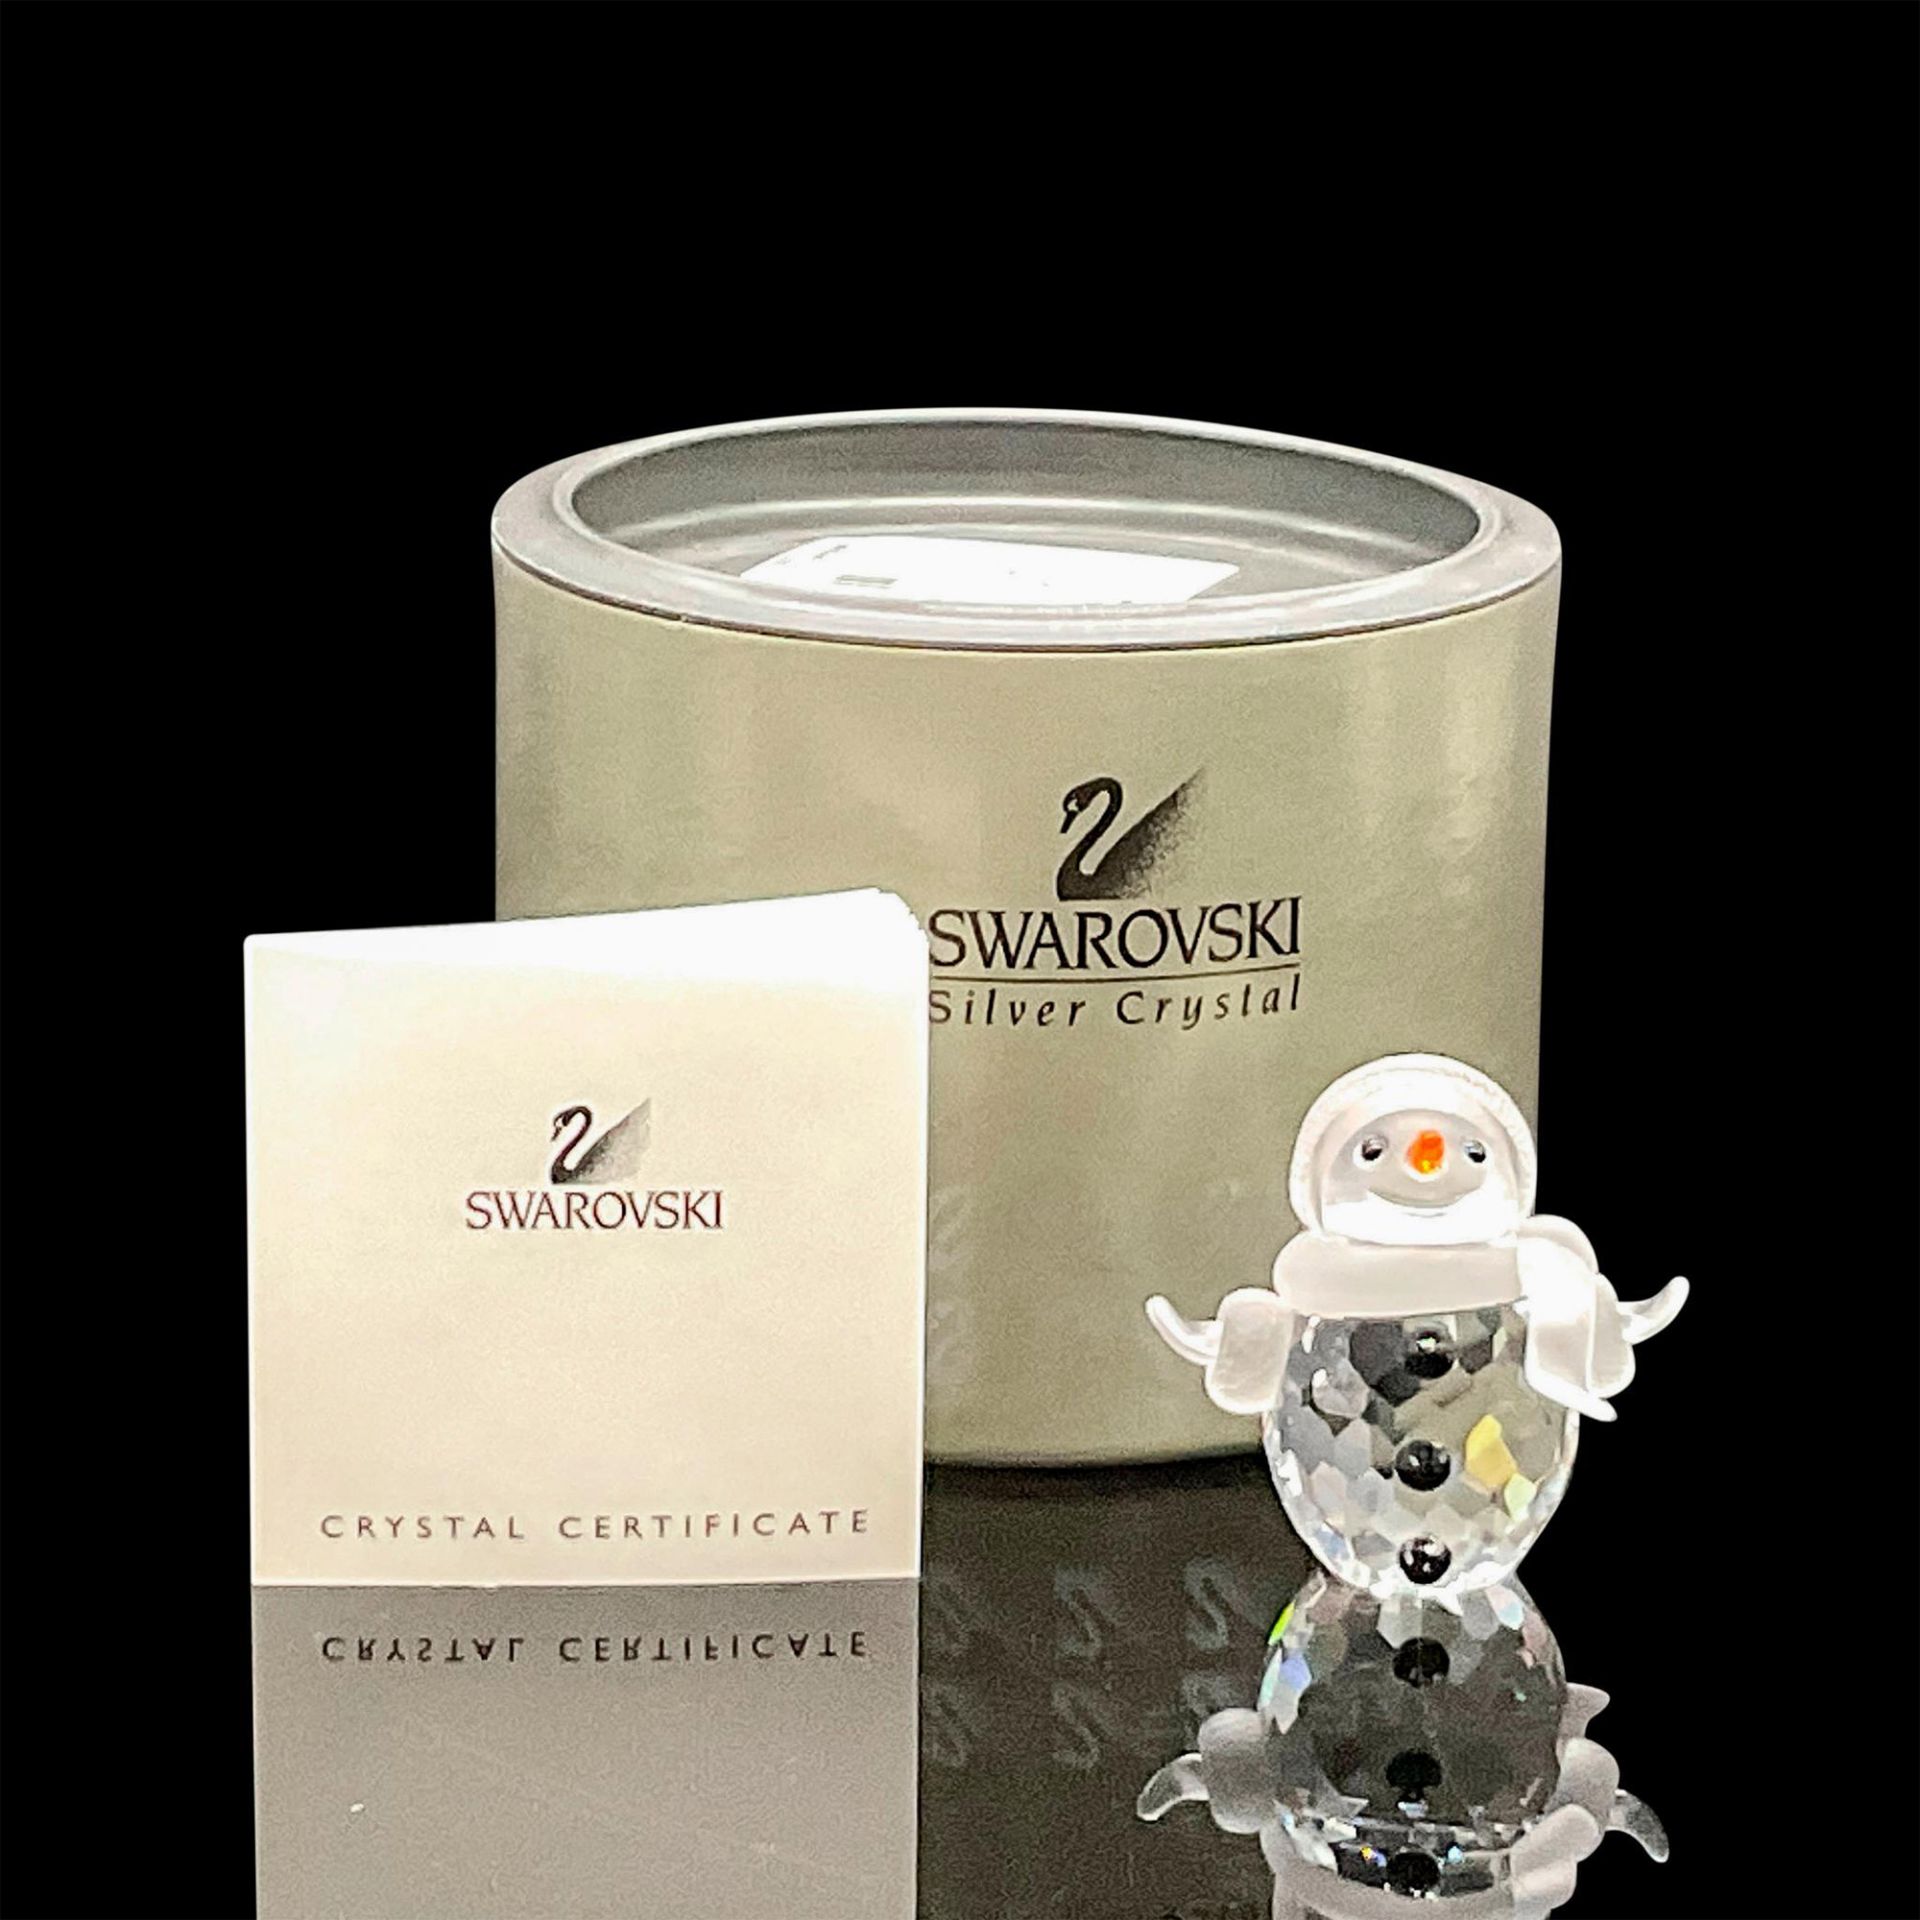 Swarovski Silver Crystal Figurine, Snowman - Image 3 of 3